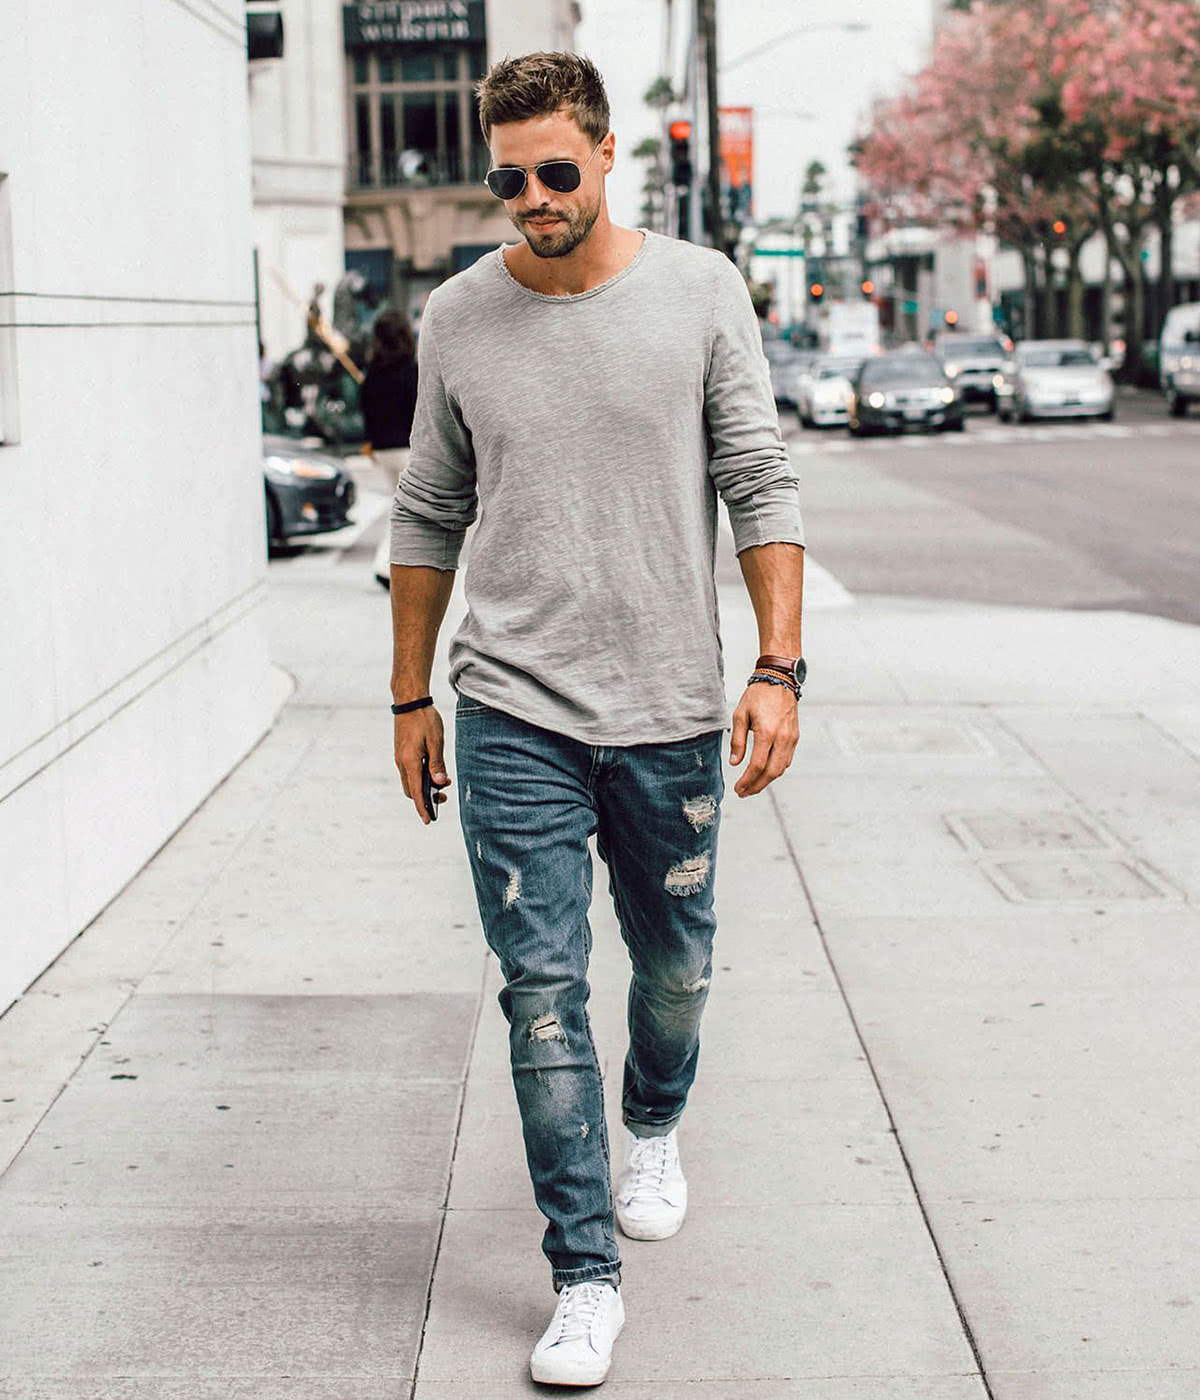 Casual dress code men street style - Luxe Digital